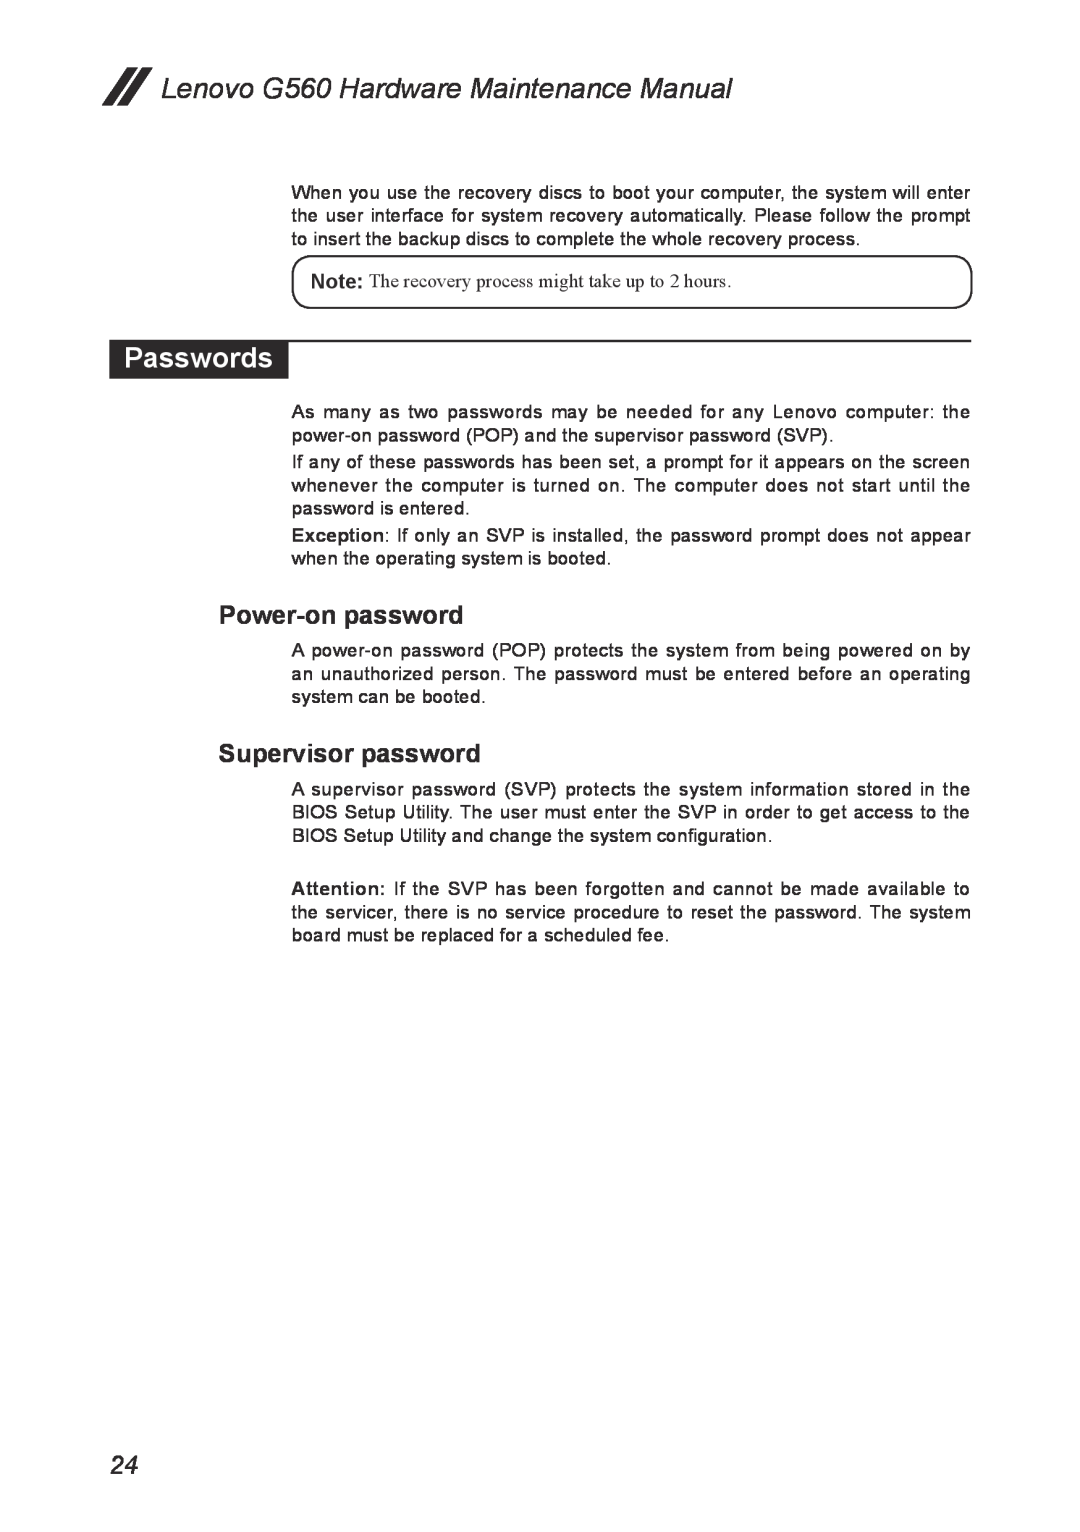 Lenovo manual Passwords, Power-on password, Supervisor password, Lenovo G560 Hardware Maintenance Manual 